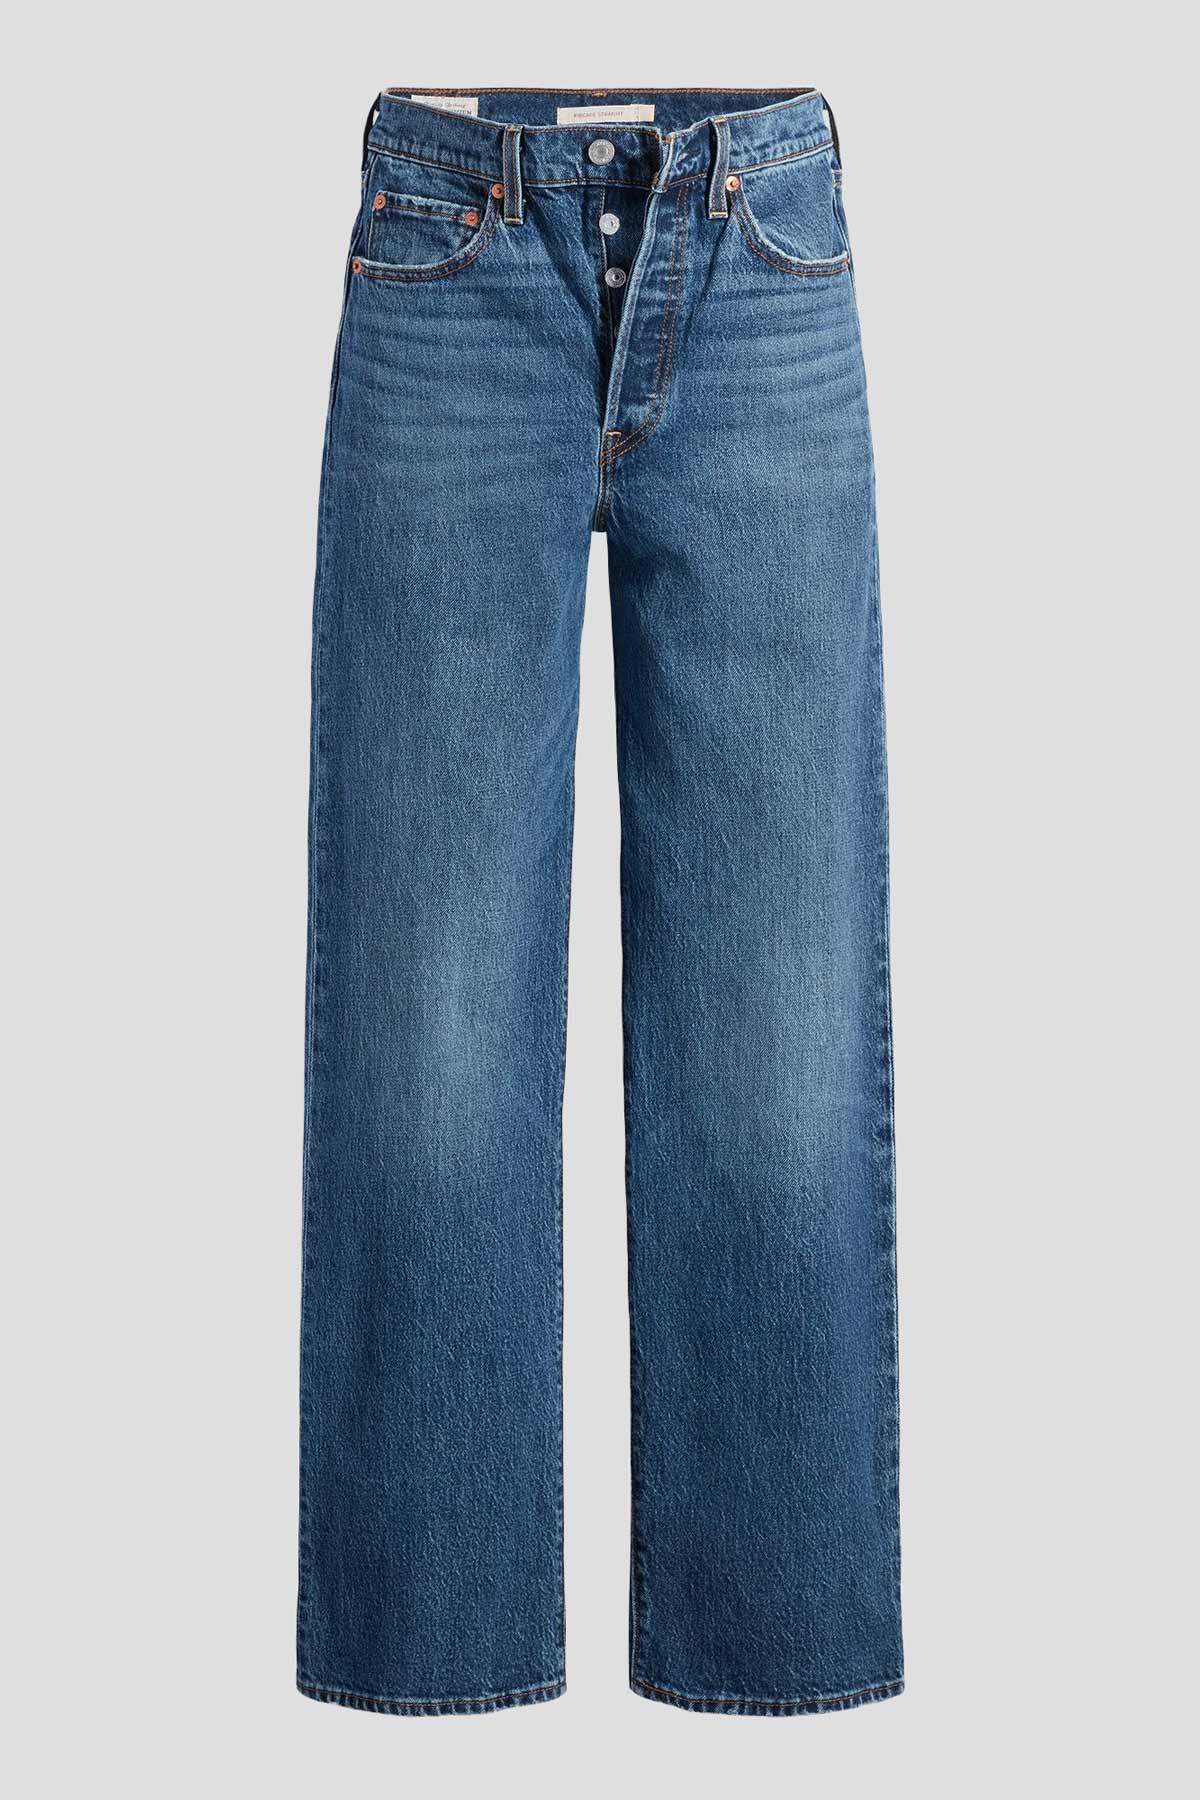 Ribcage Full Length Jeans